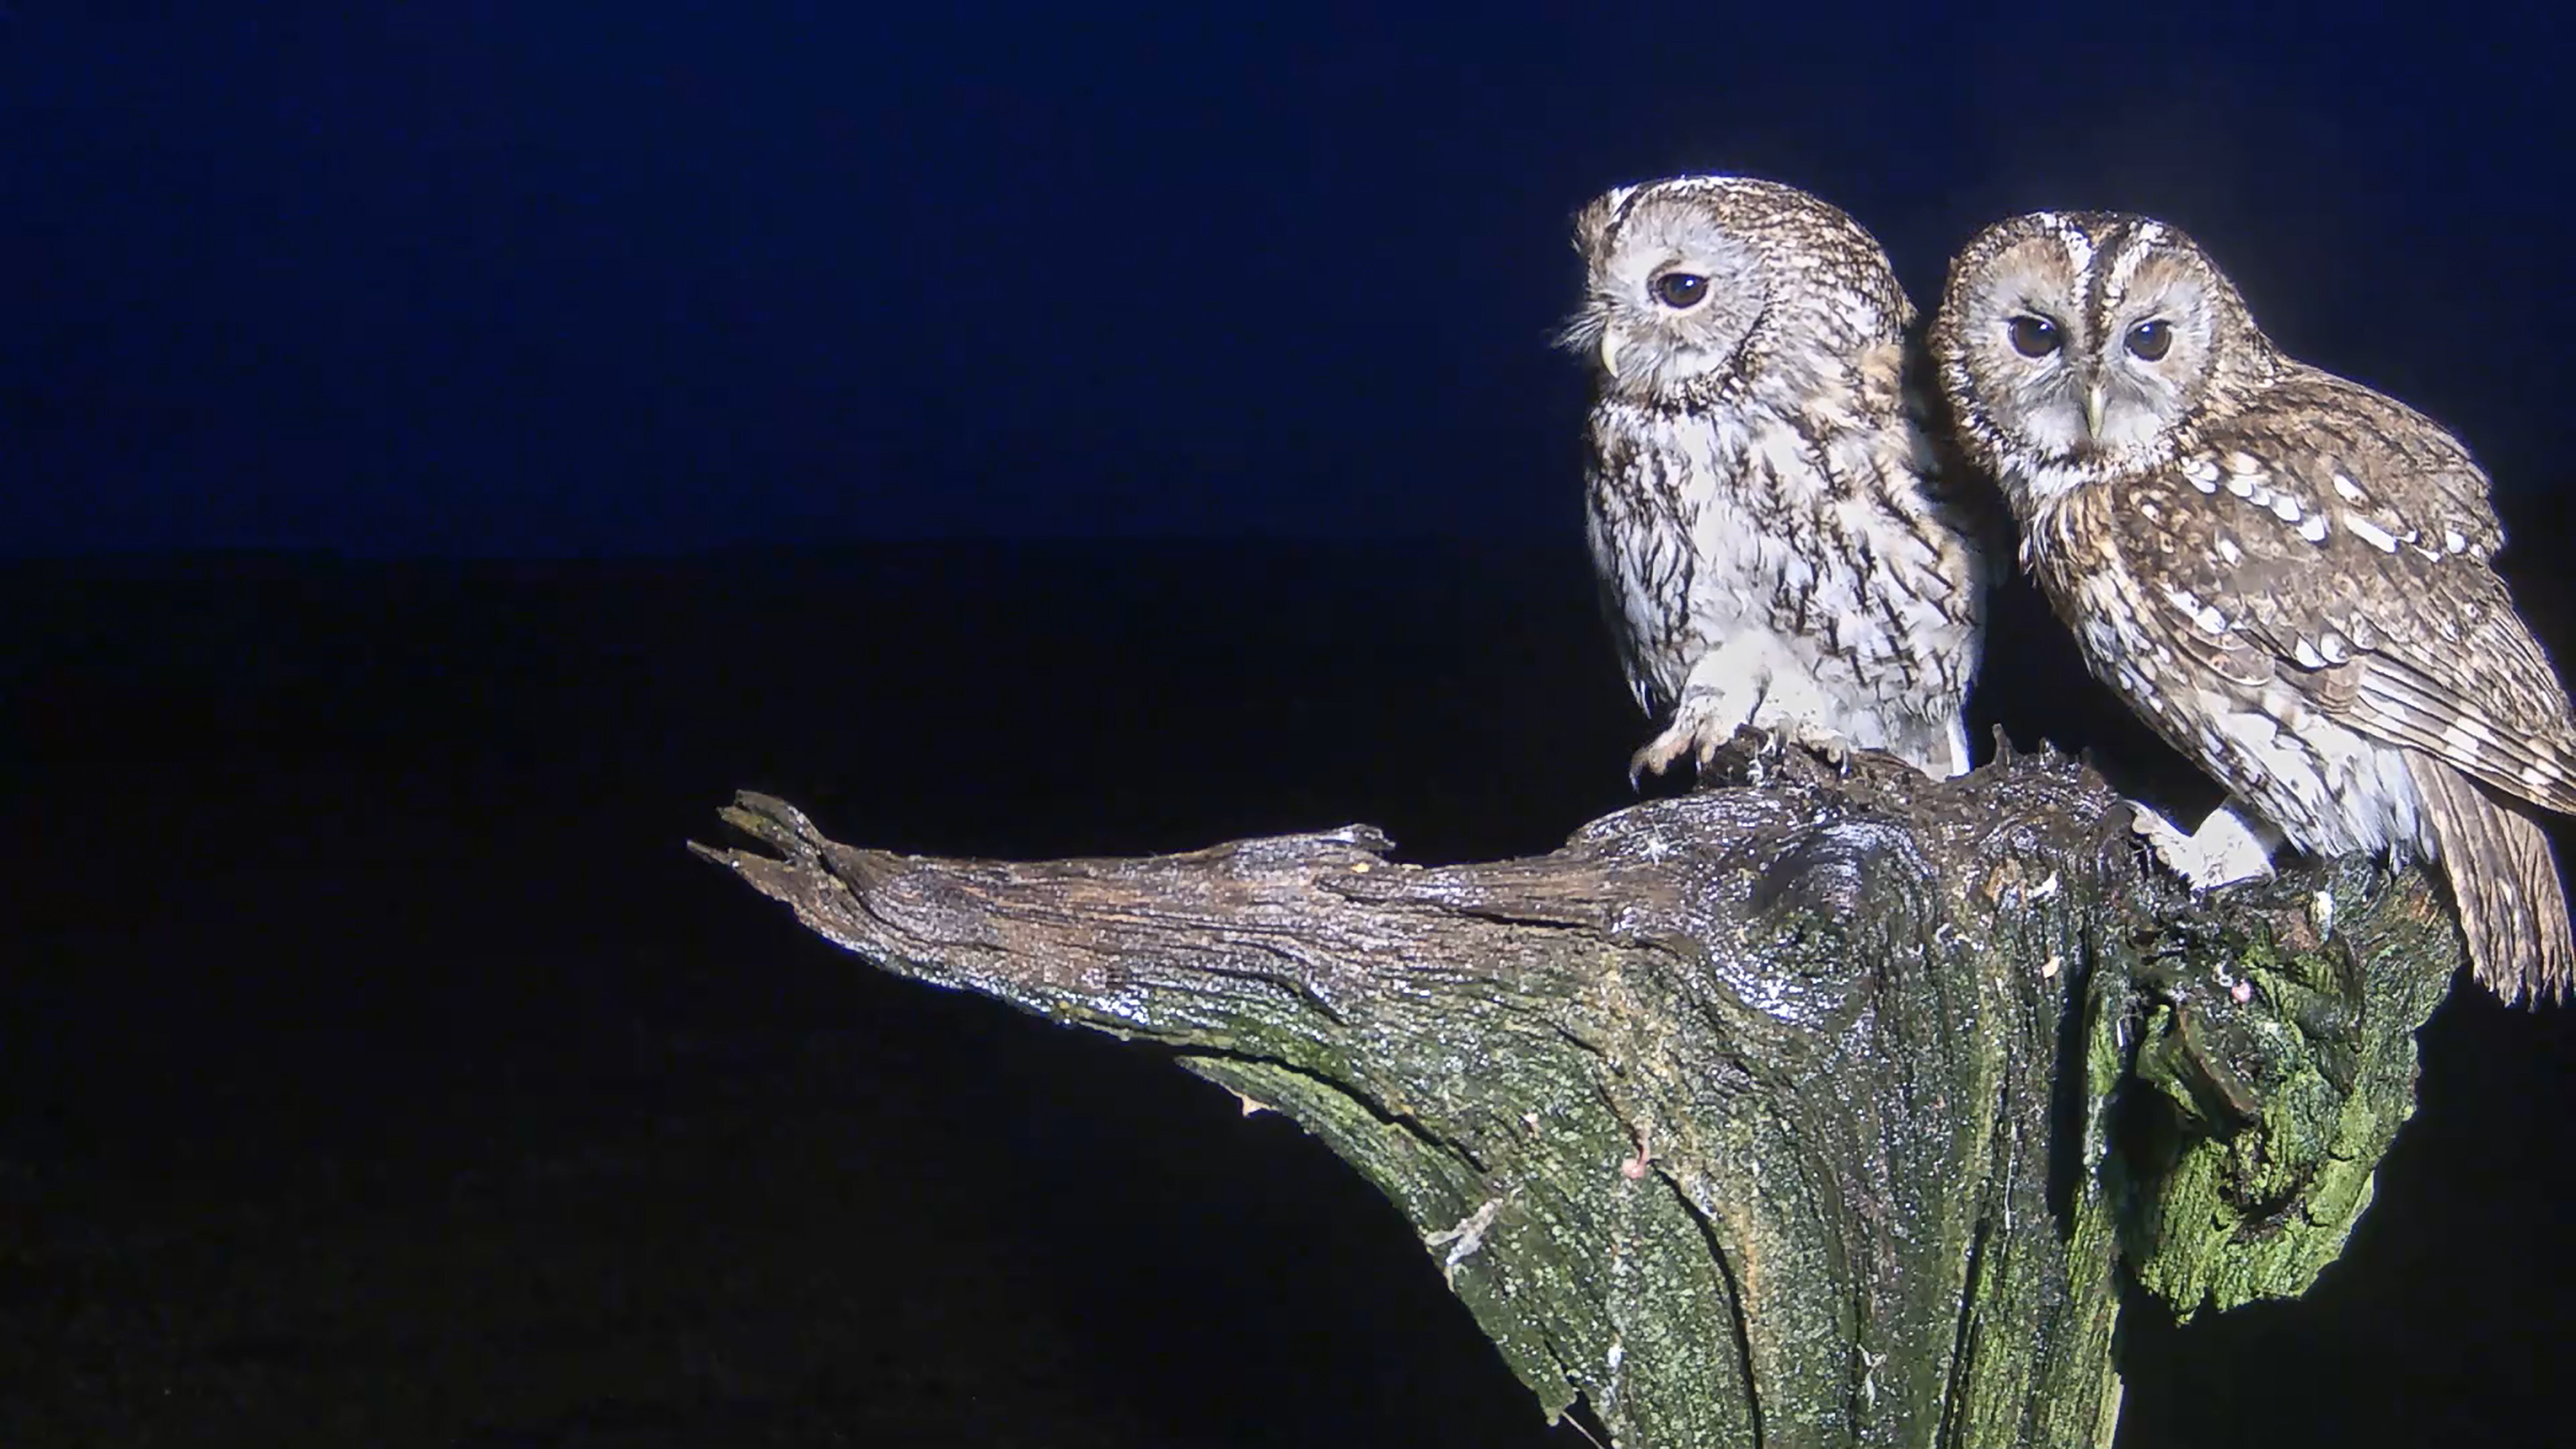 Tawny owls Luna and Bomber. Photo: courtesy of Robert Fuller